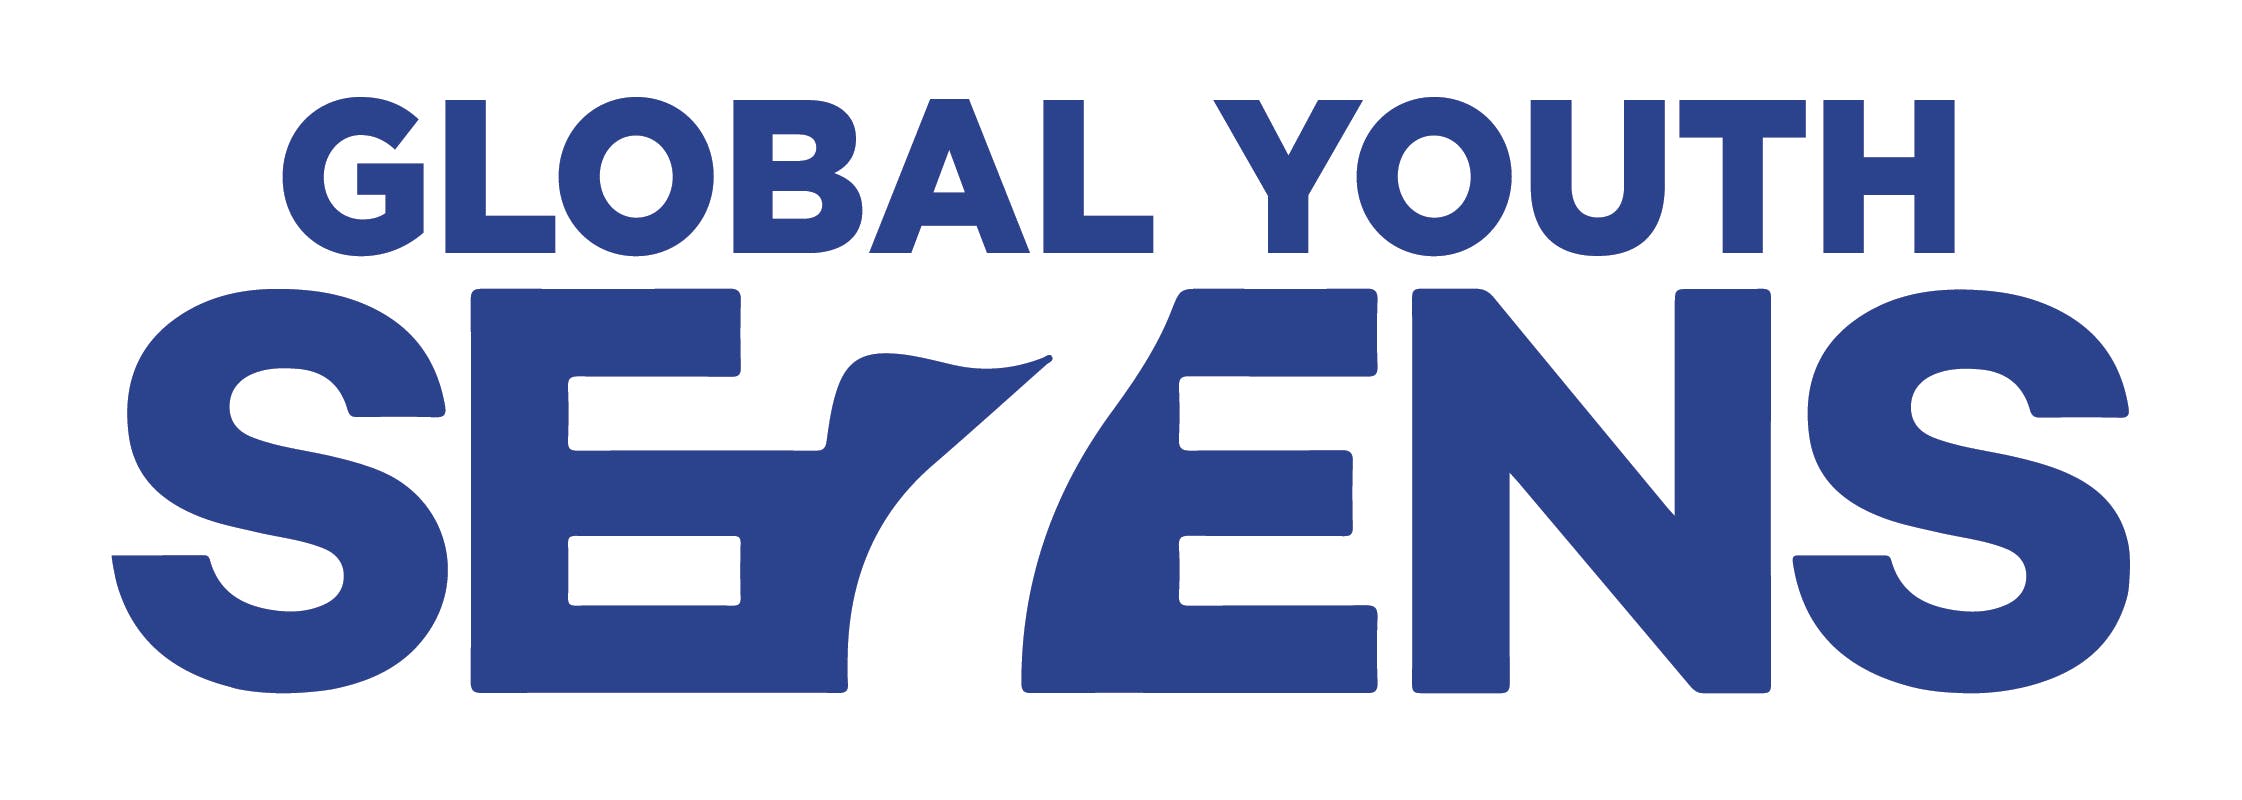 Global Youth Sevens logo